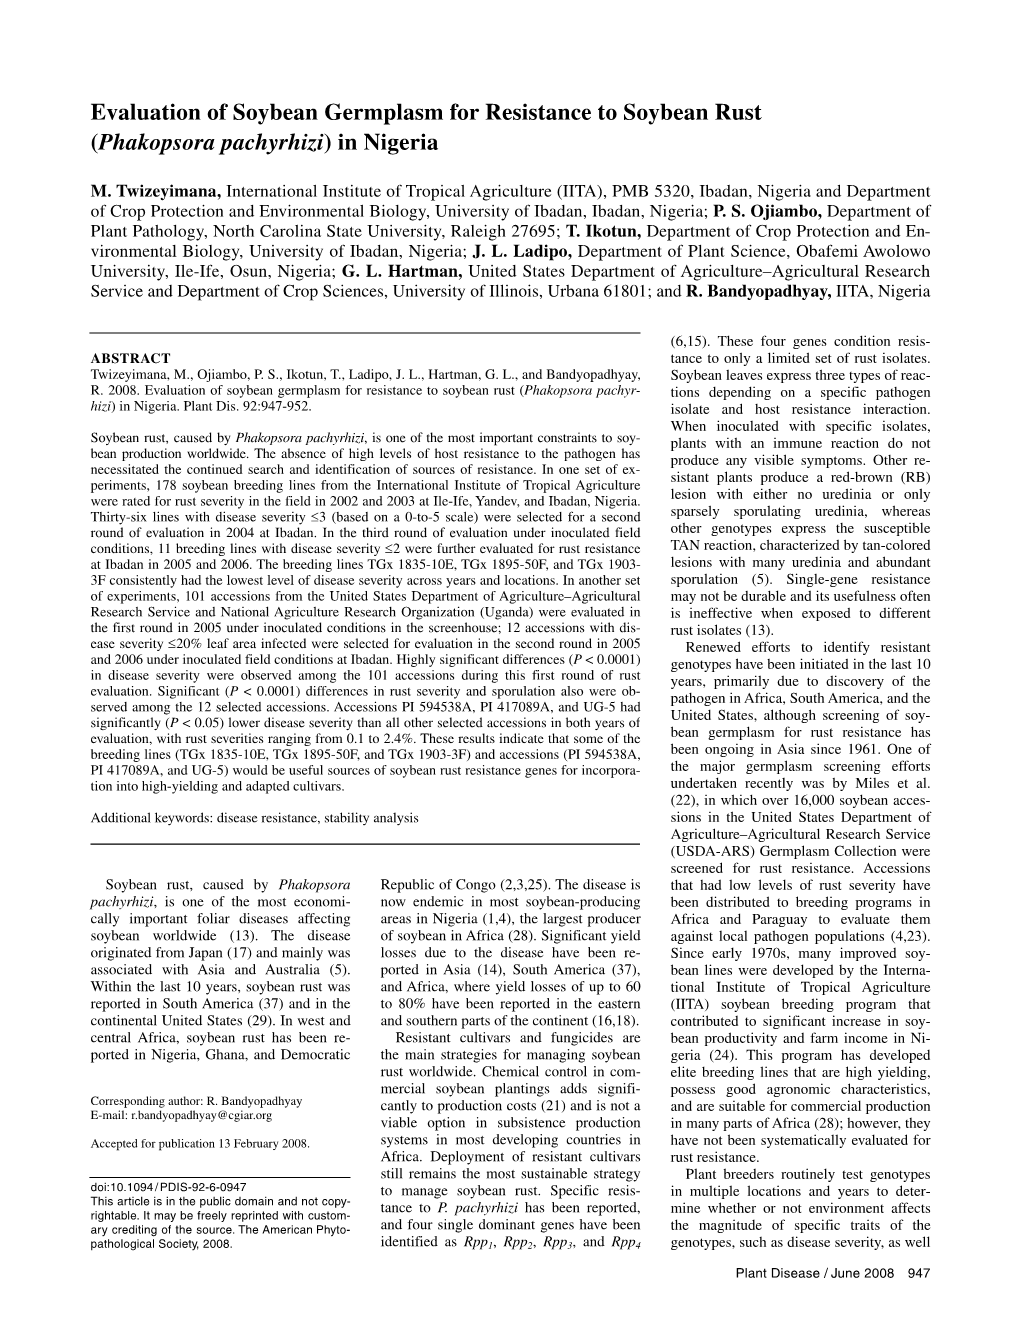 Evaluation of Soybean Germplasm for Resistance to Soybean Rust (Phakopsora Pachyrhizi) in Nigeria